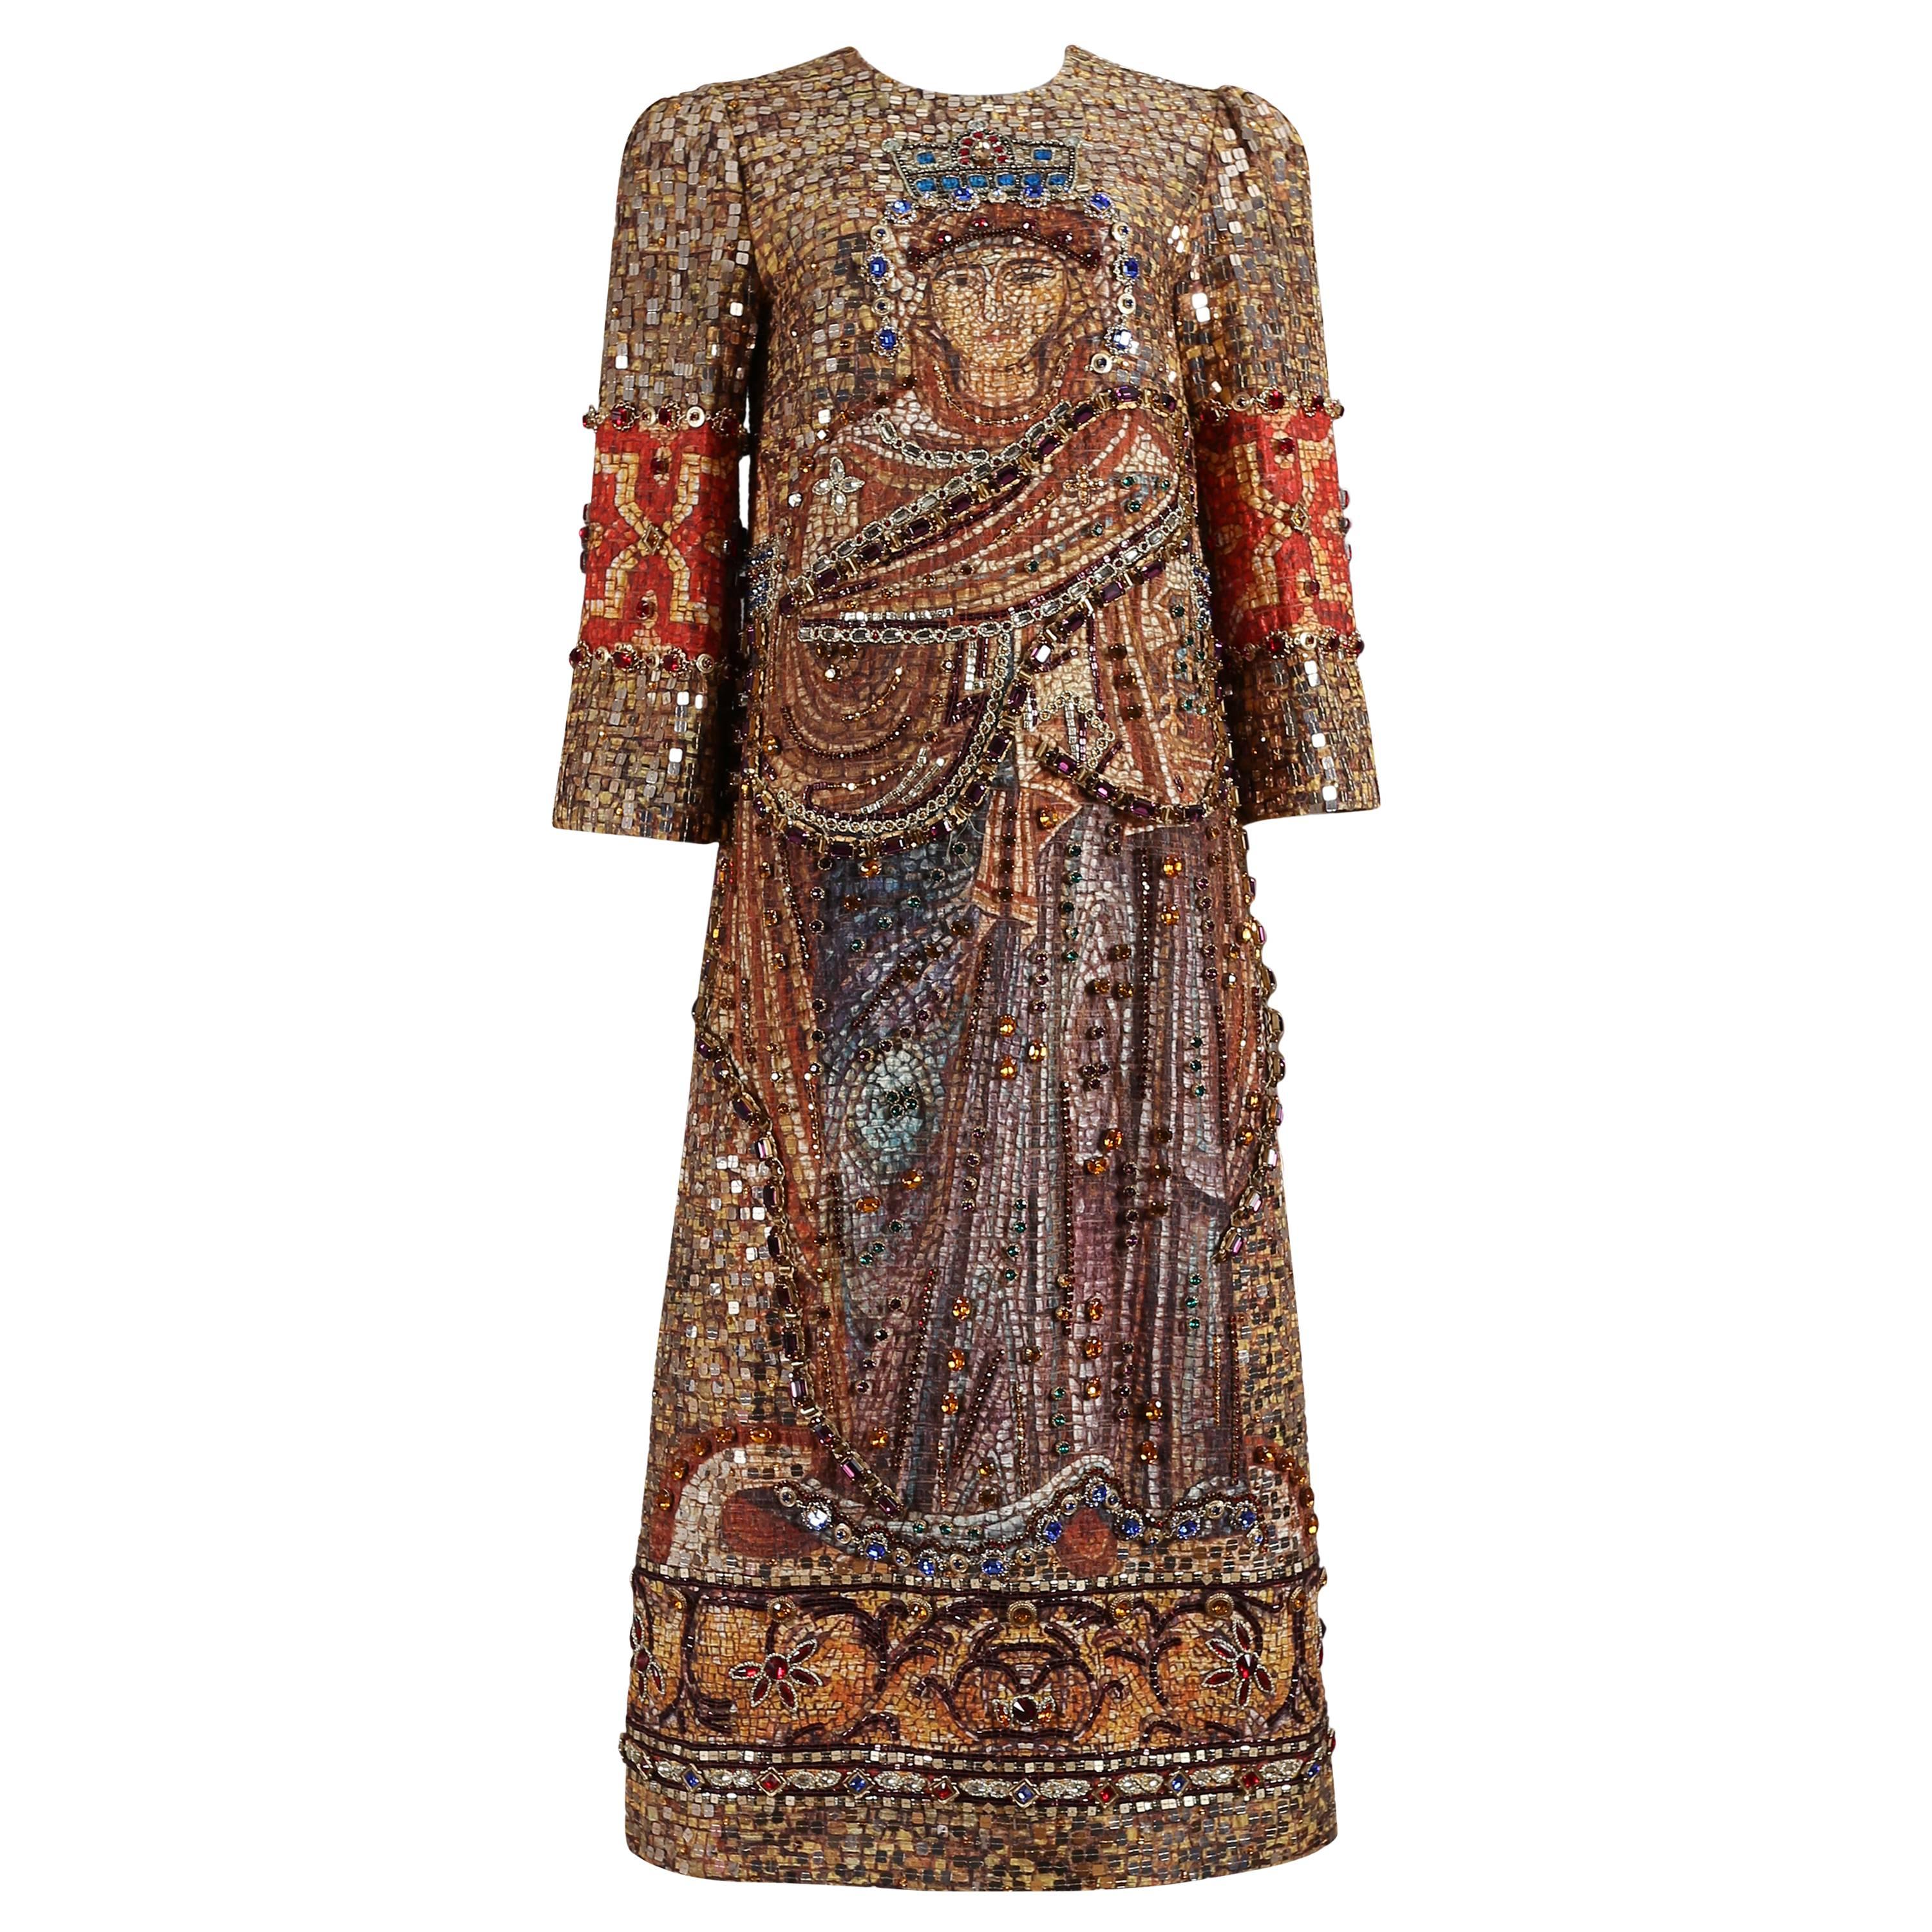 Dolce & Gabbana mosaic embellished shift dress, circa 2013